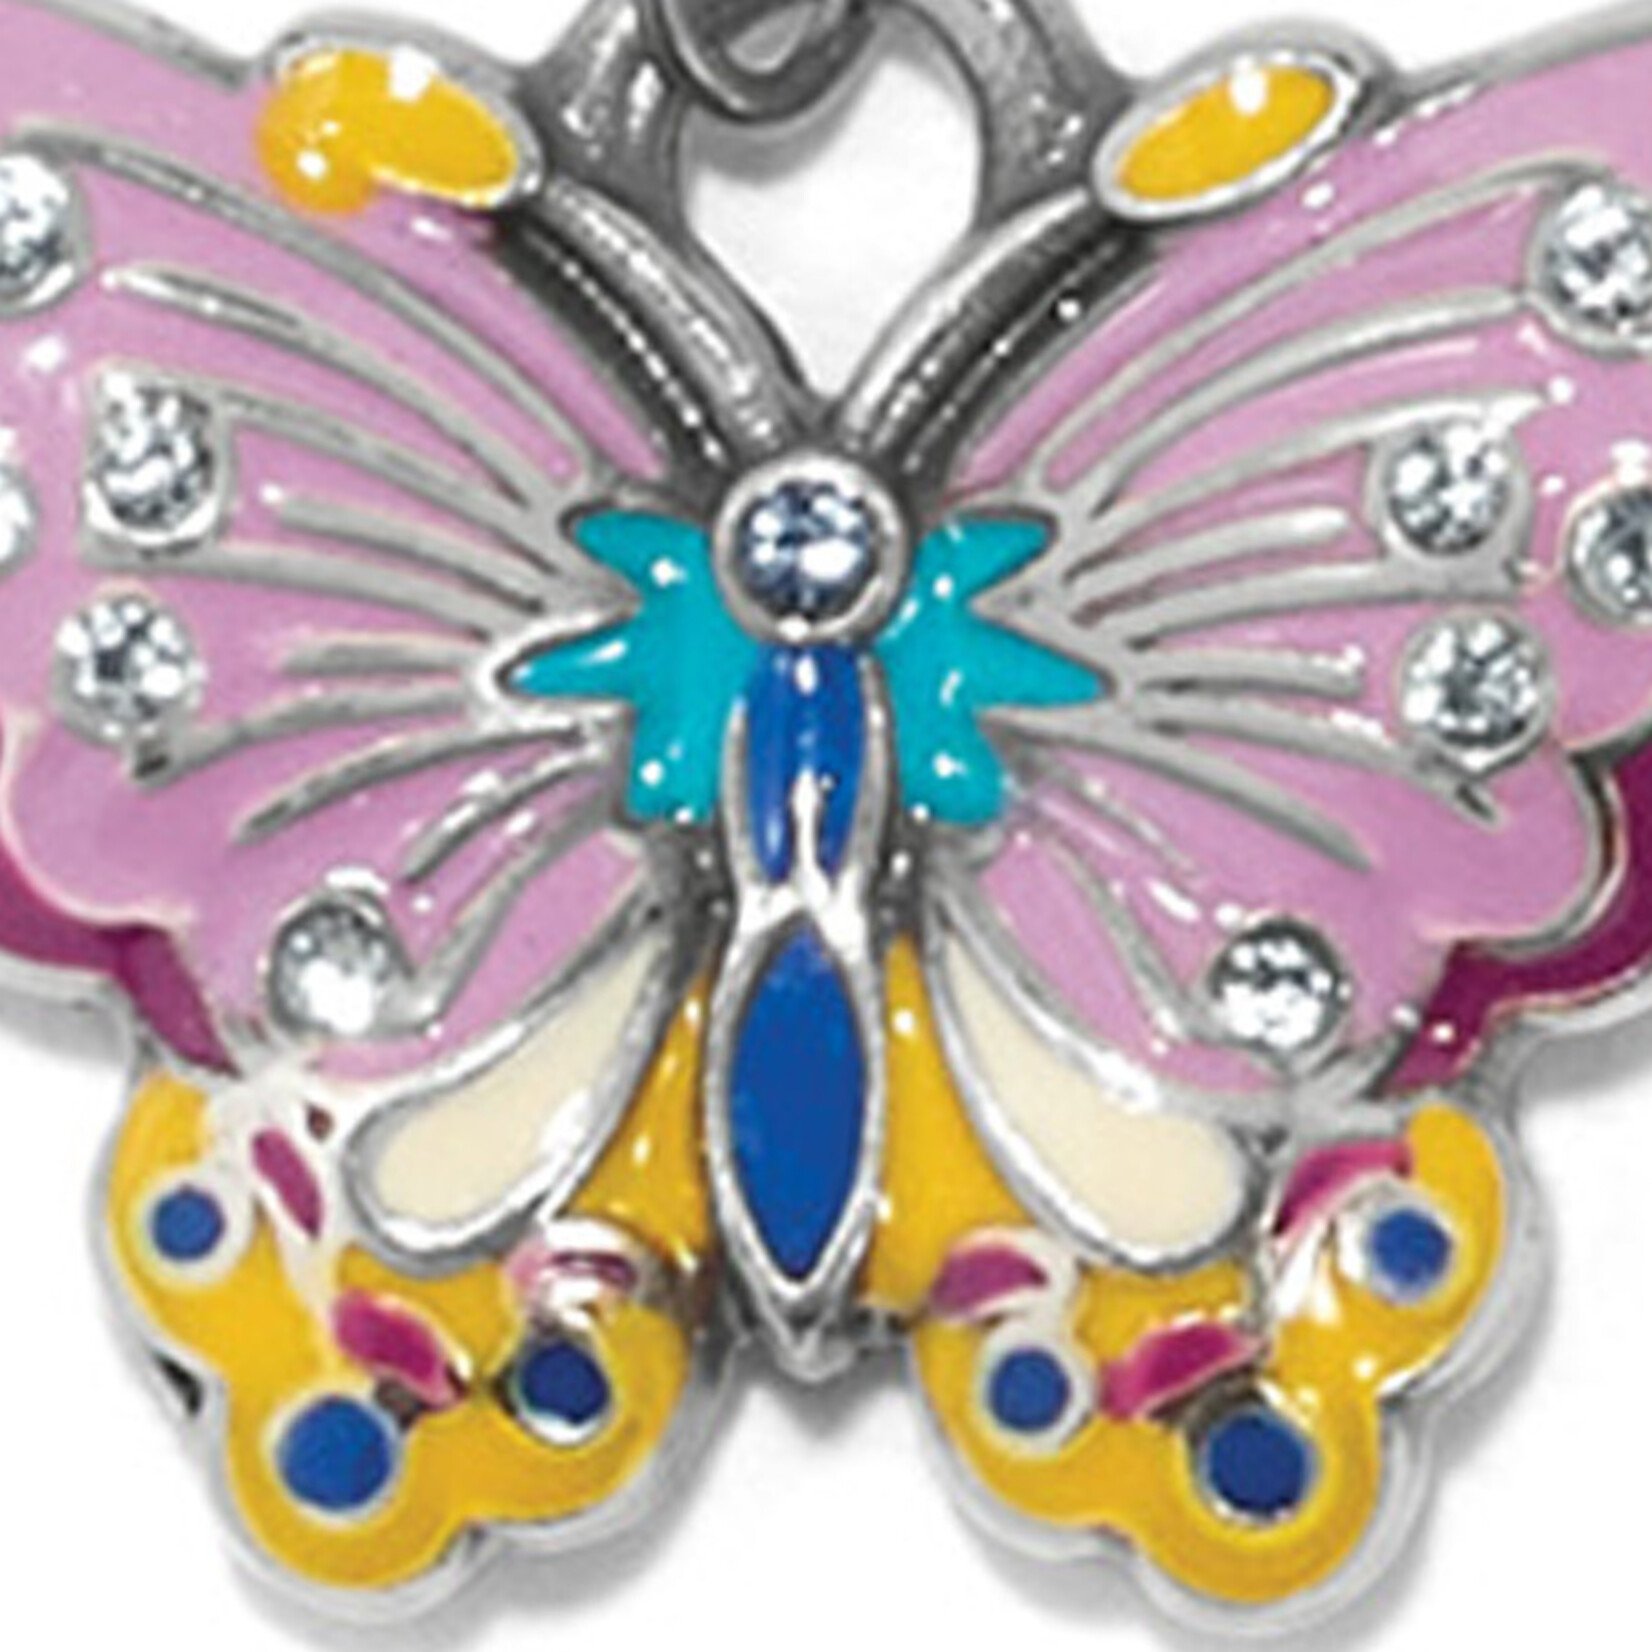 Brighton JA9961 Kyoto In Bloom Butterfly French Wire Earrings